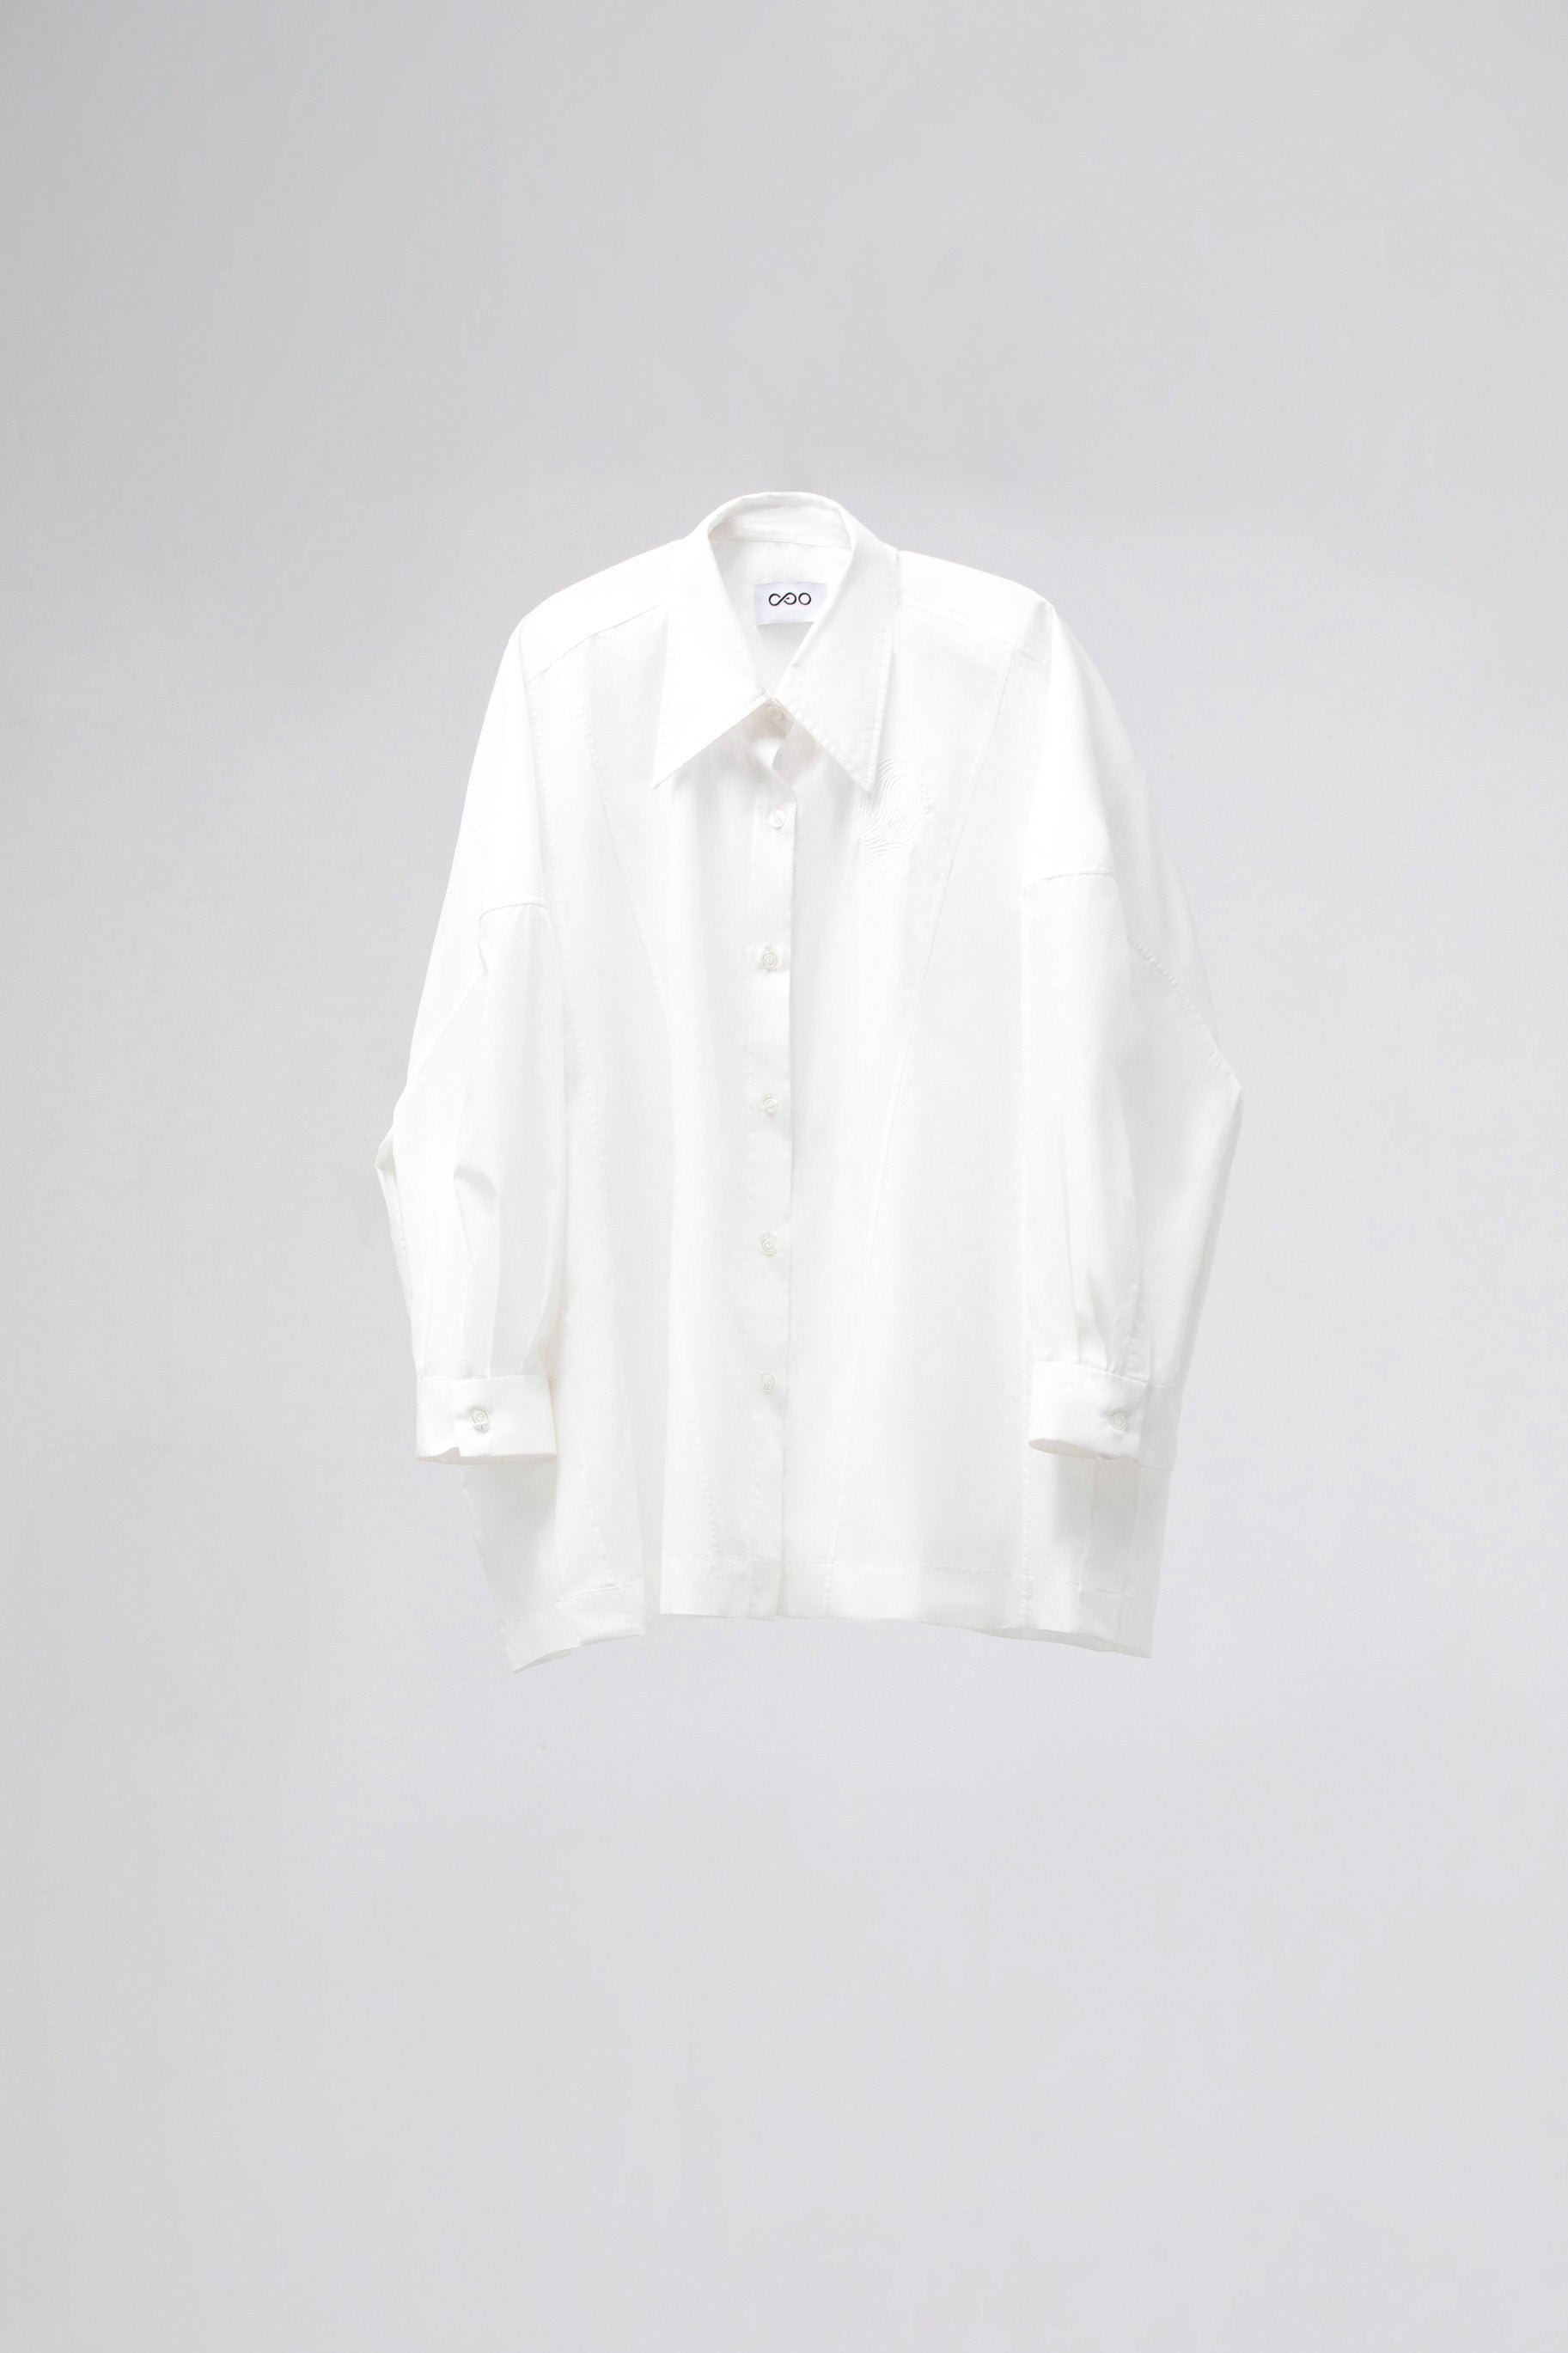 thung-thinh-classic-shirt-white-CAOSTU-ASTOUD